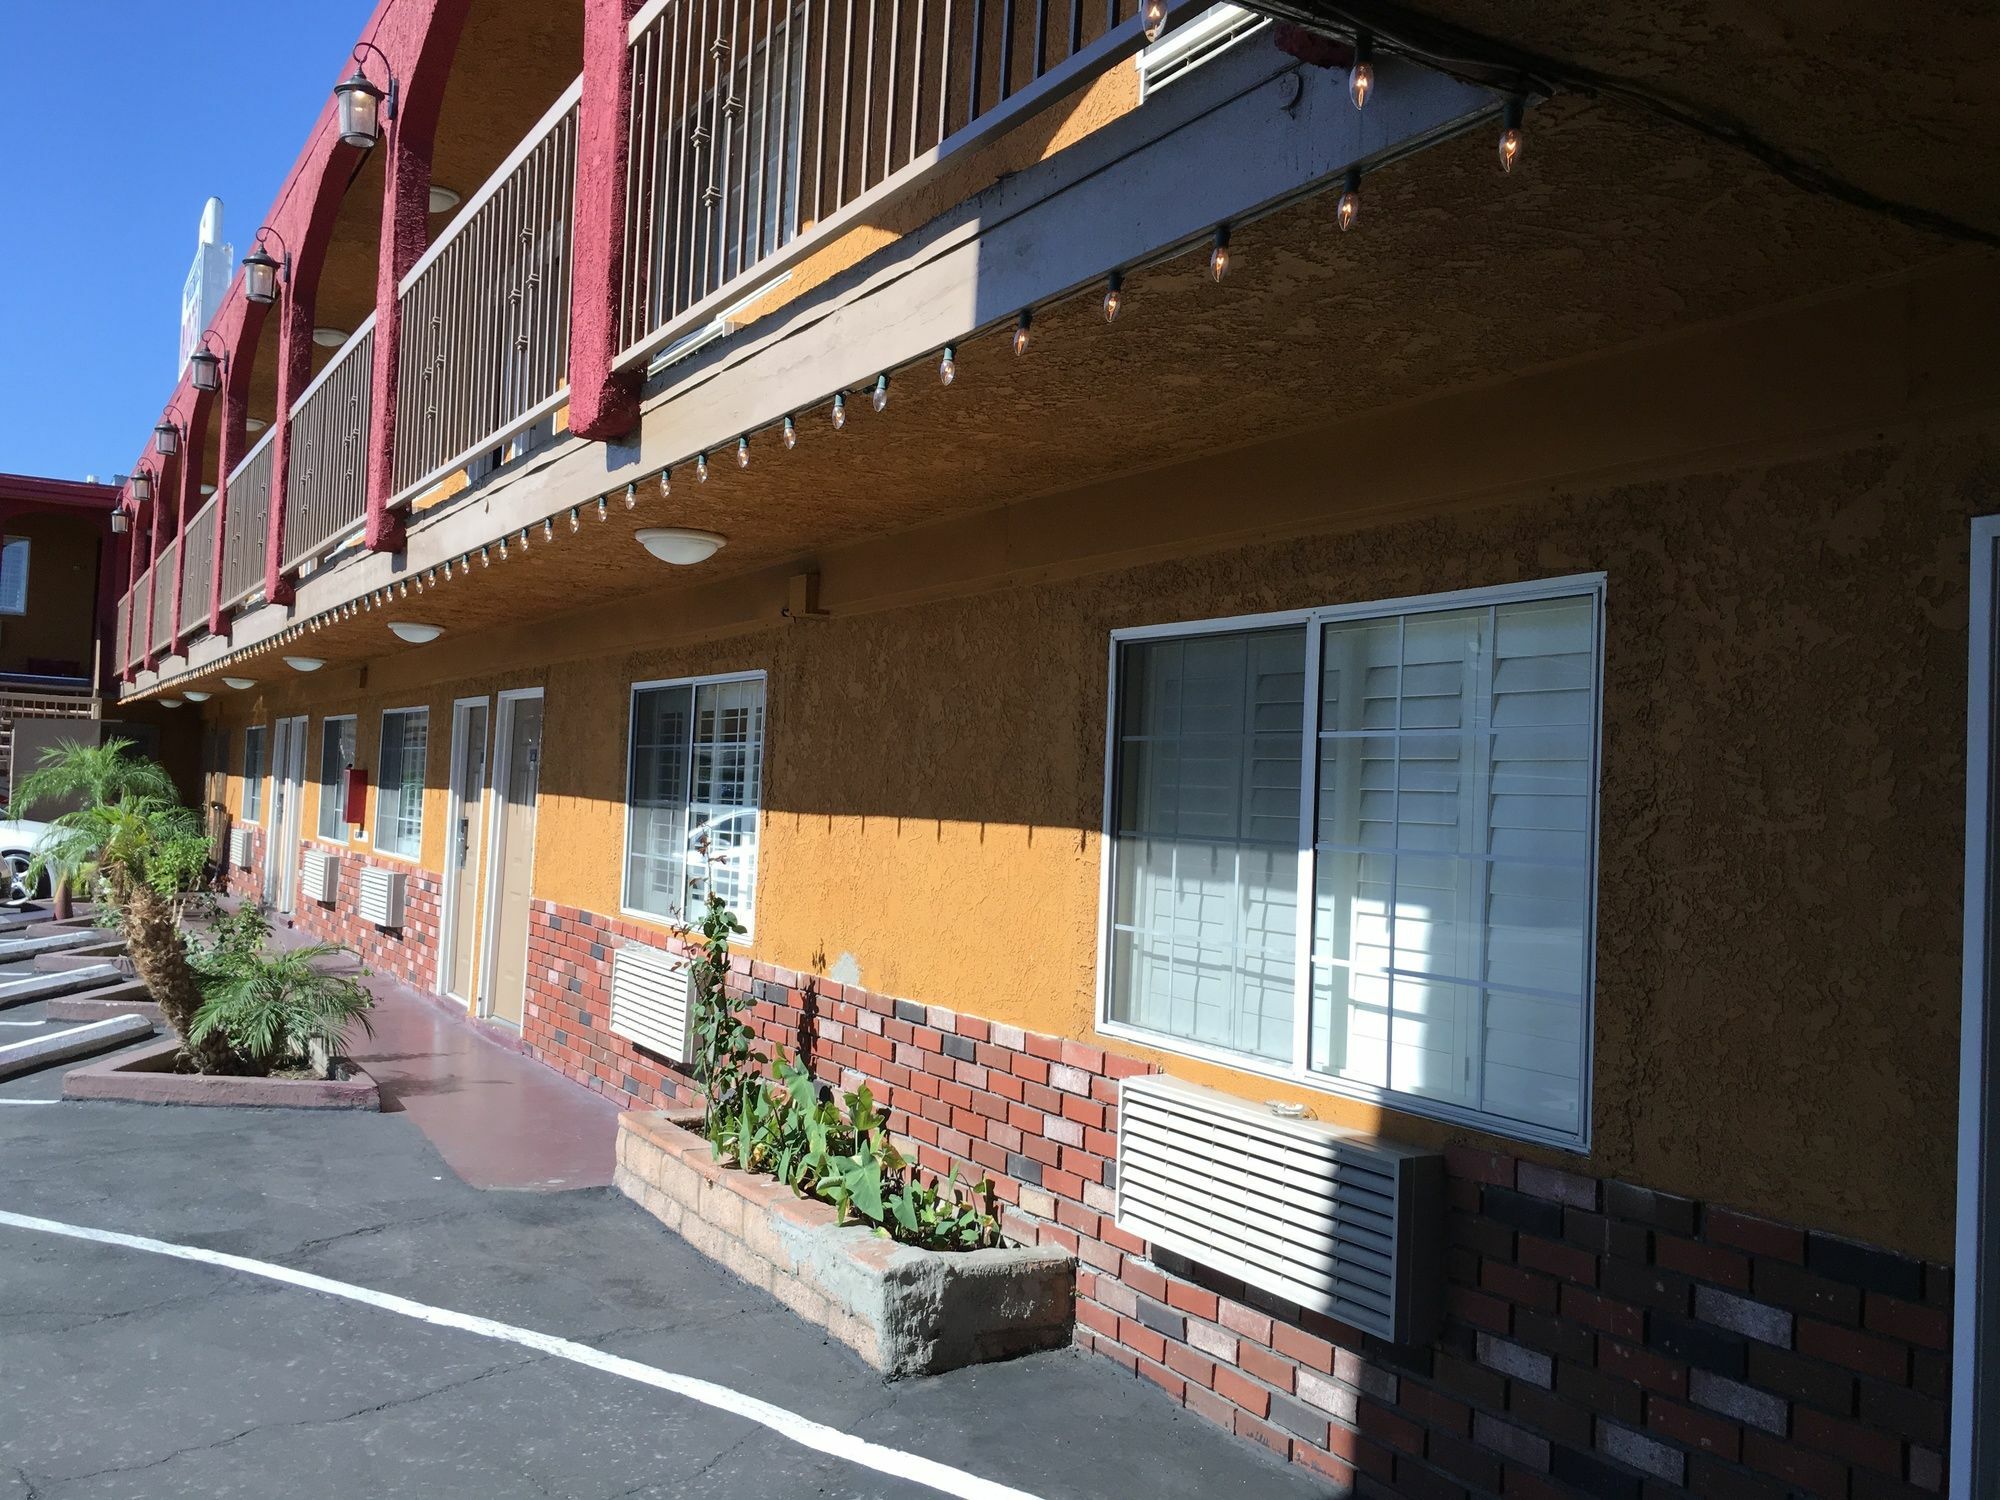 Hyde Park Motel Los Angeles Exterior photo